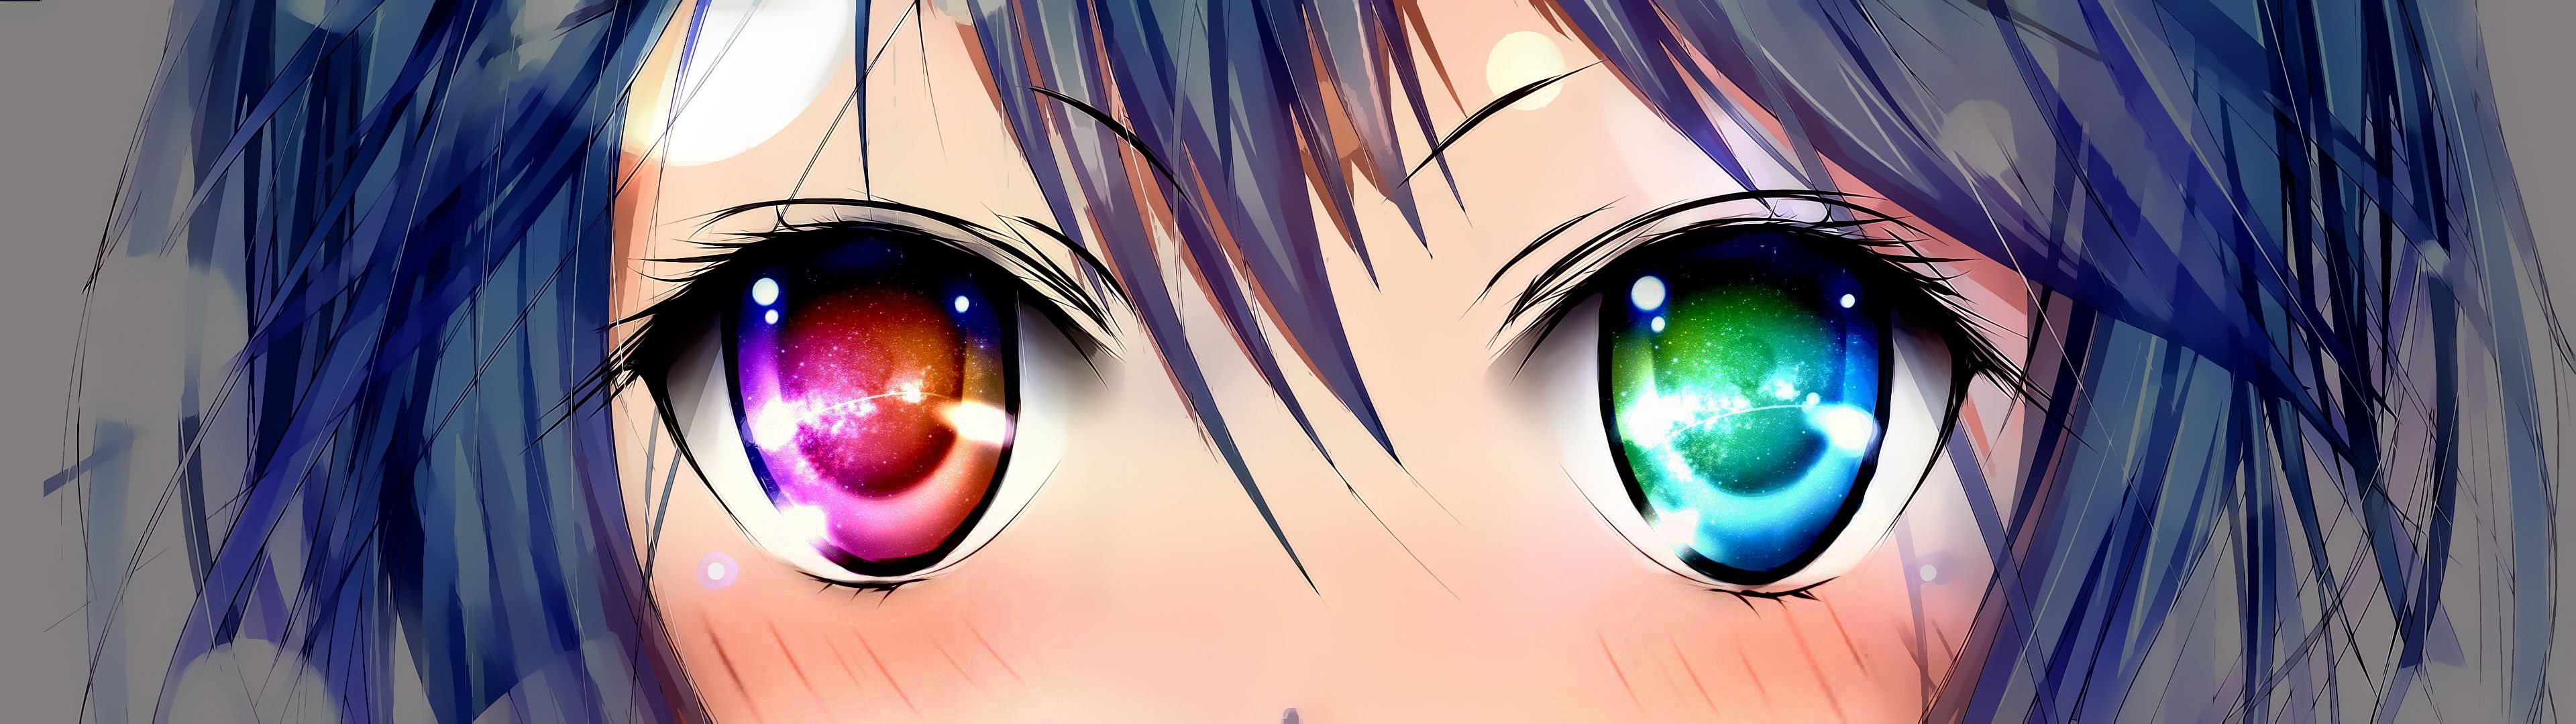 Anime Eyes Wallpaper 3840x2160 63765 - Baltana